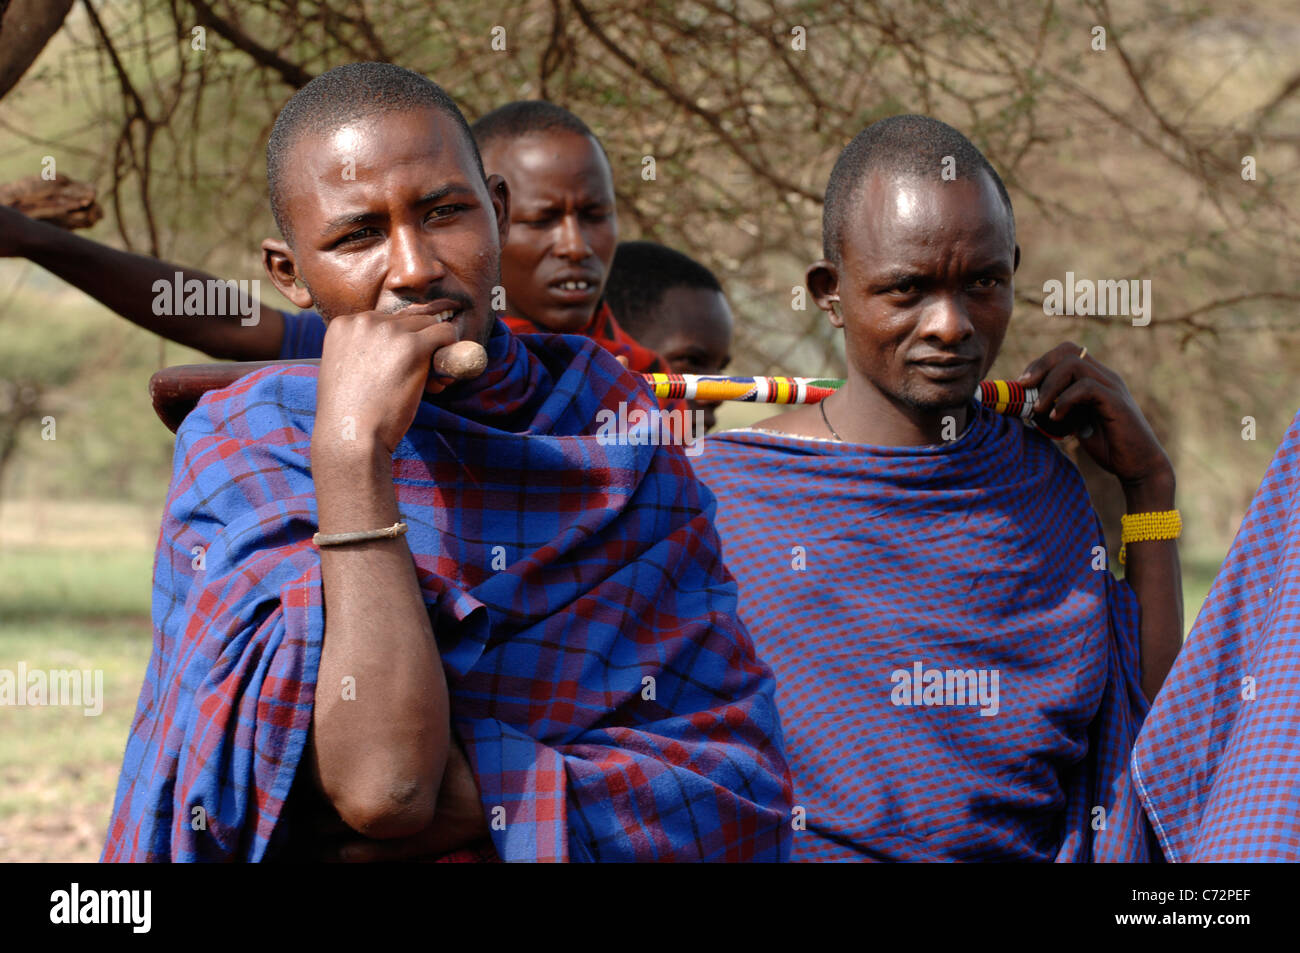 Africa. Tanzania. On March, 5th 2009 . Maasai village. A group portrait maasai men. Savanna. Stock Photo